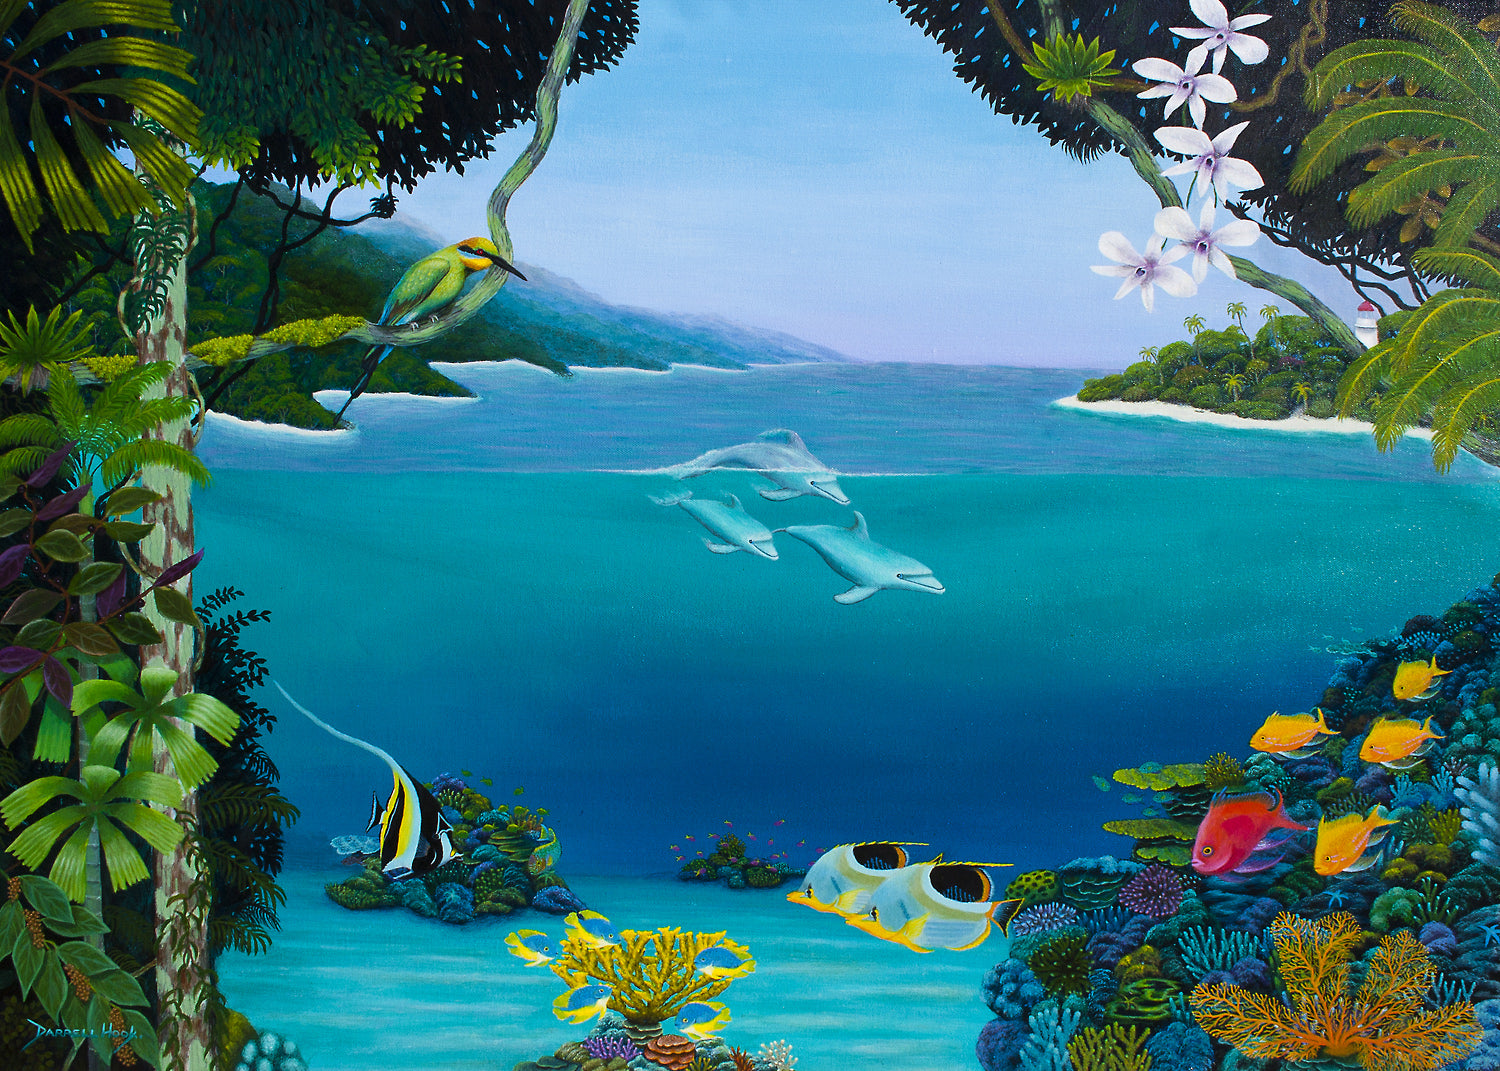 Paradise Found – Original Acrylic on Canvas by Darrell Hook